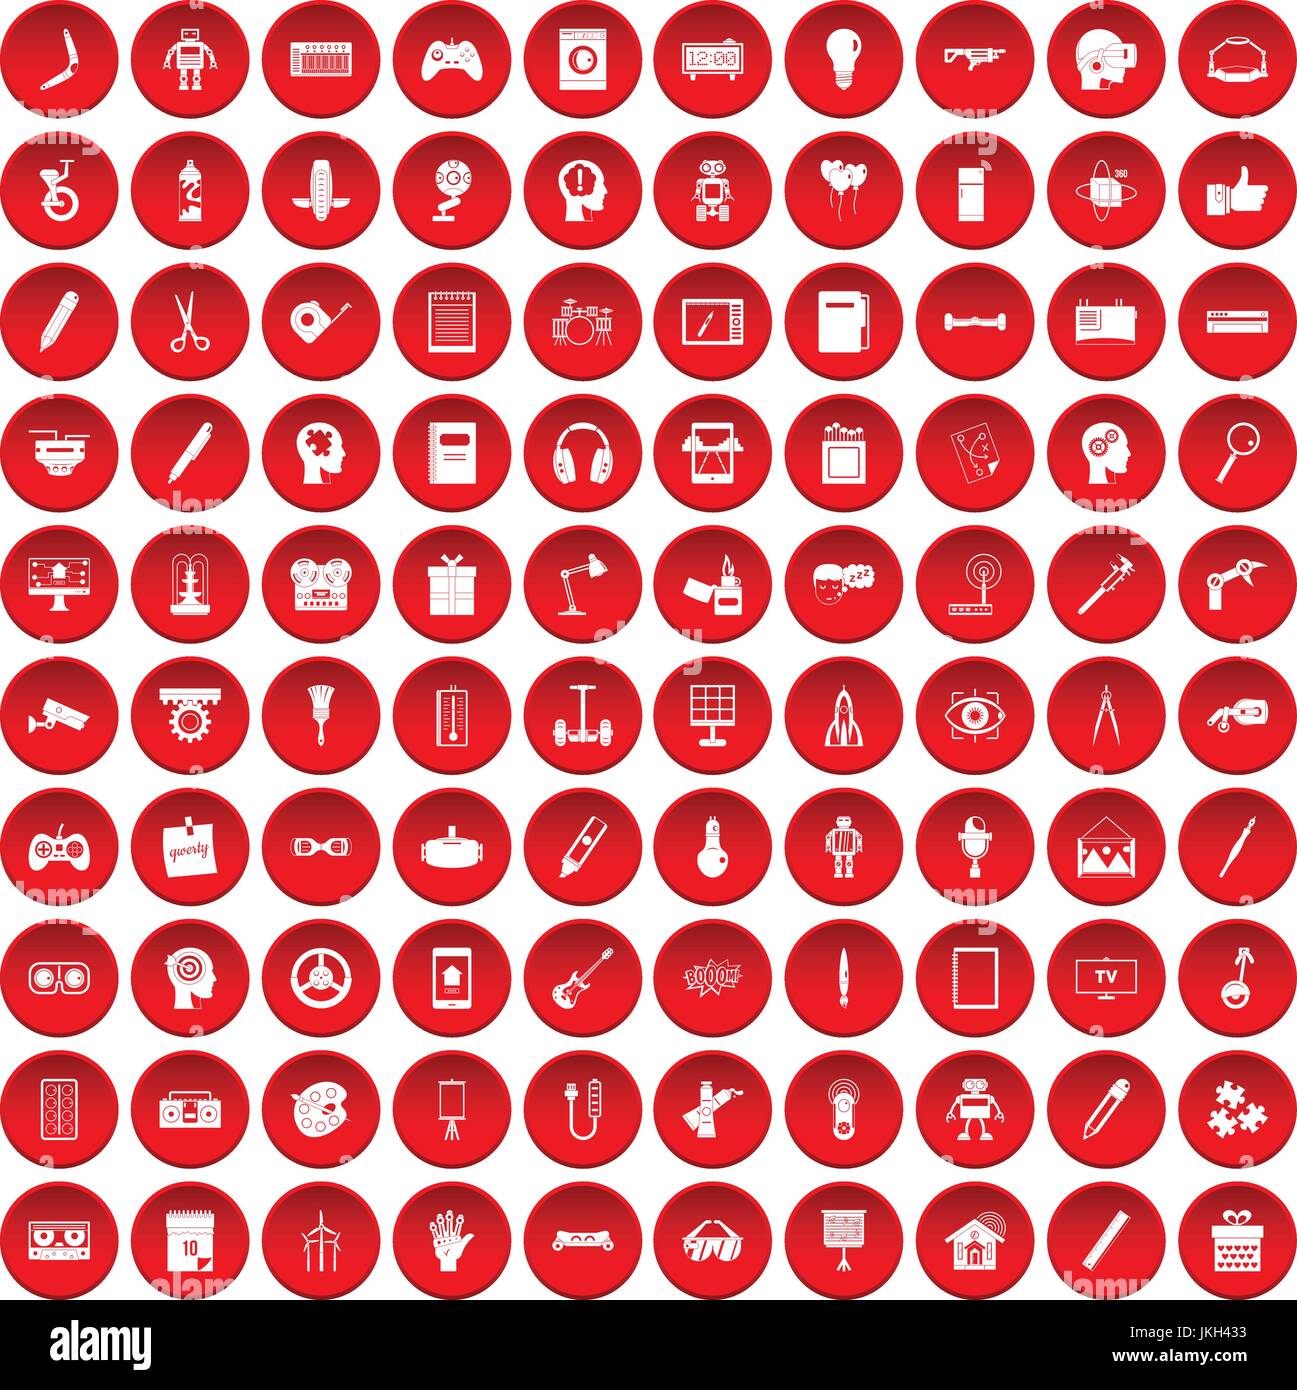 100 kreative Idee Icons set rot Stock Vektor